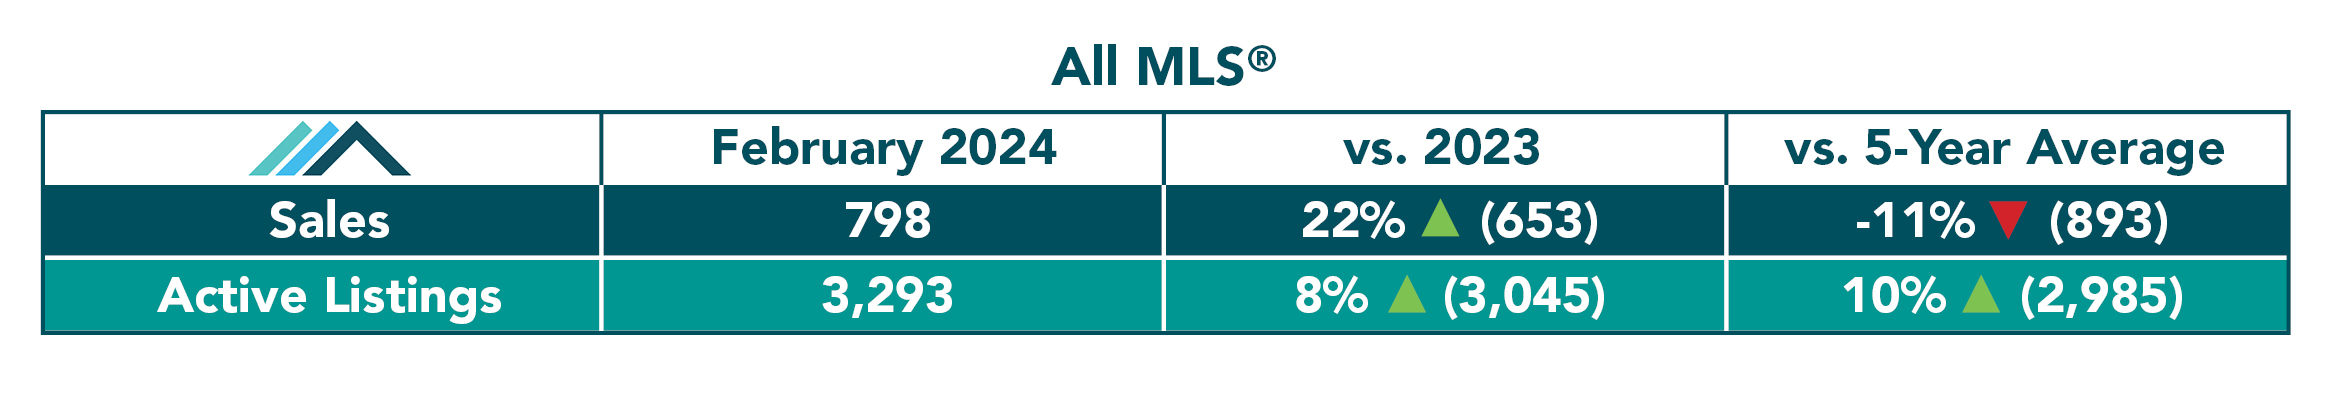 All-MLS-Table-February-2024.jpg (314 KB)